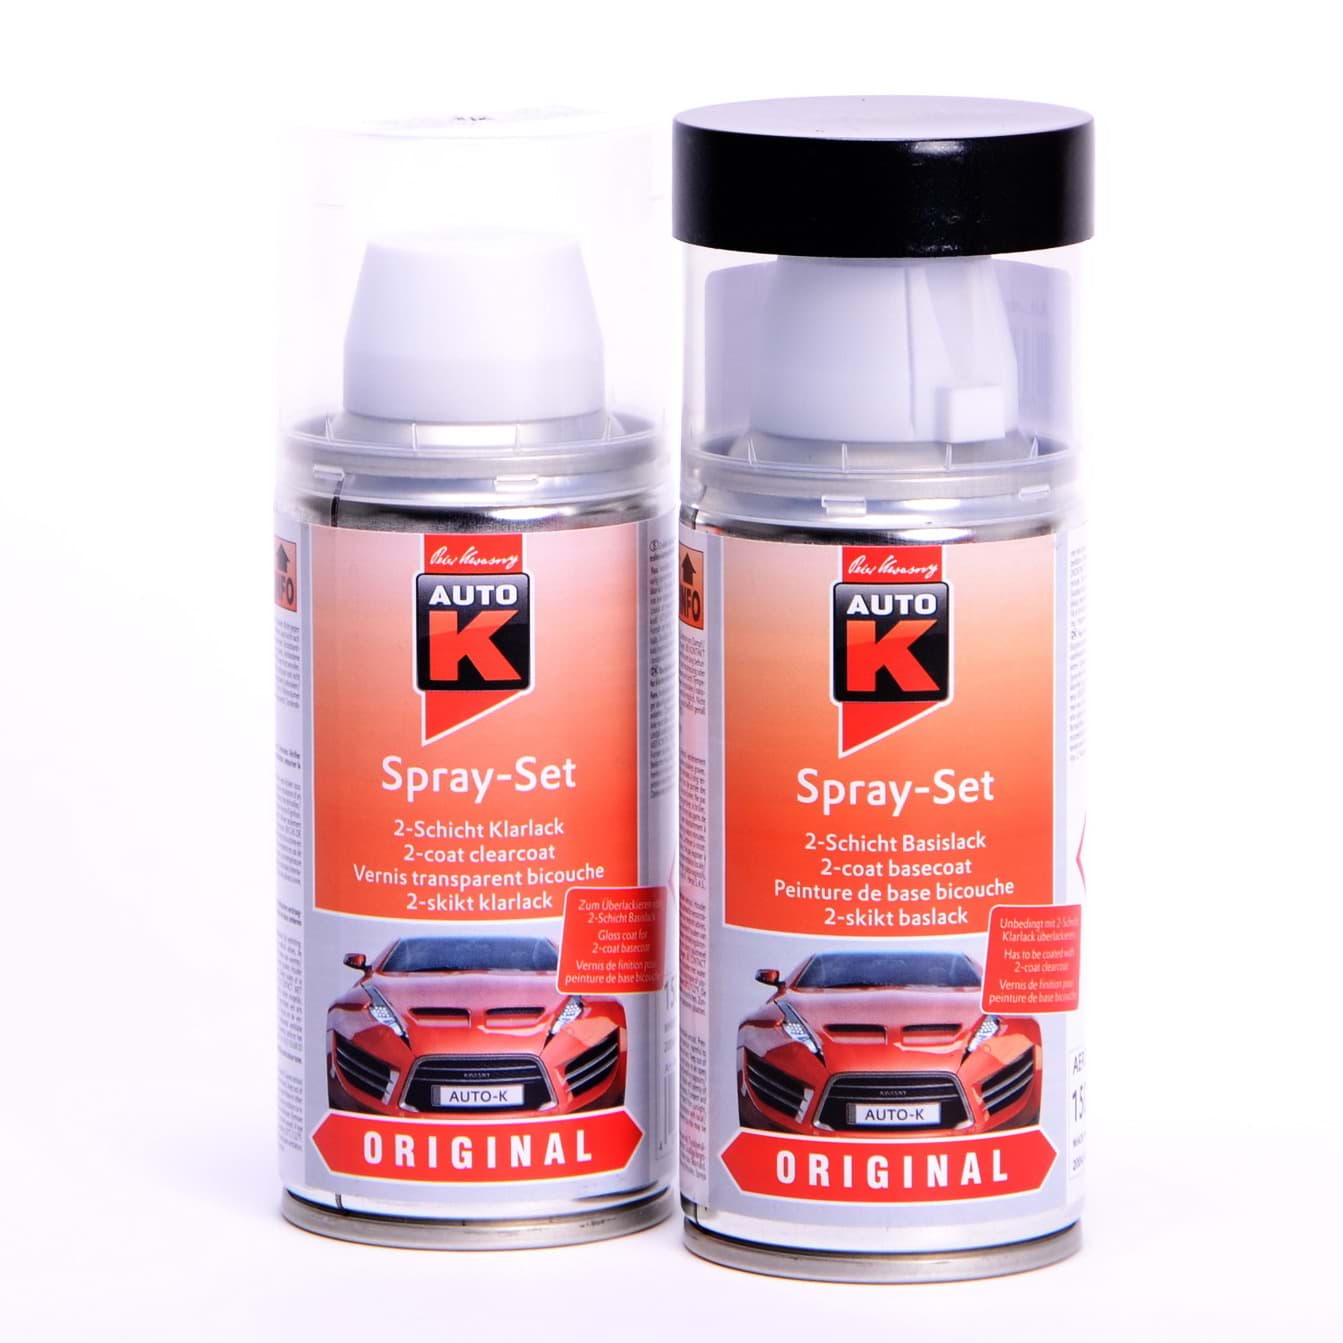 Afbeelding van Auto-K Spray-Set Autolack für Opel 271 Lagunenblau met 21368